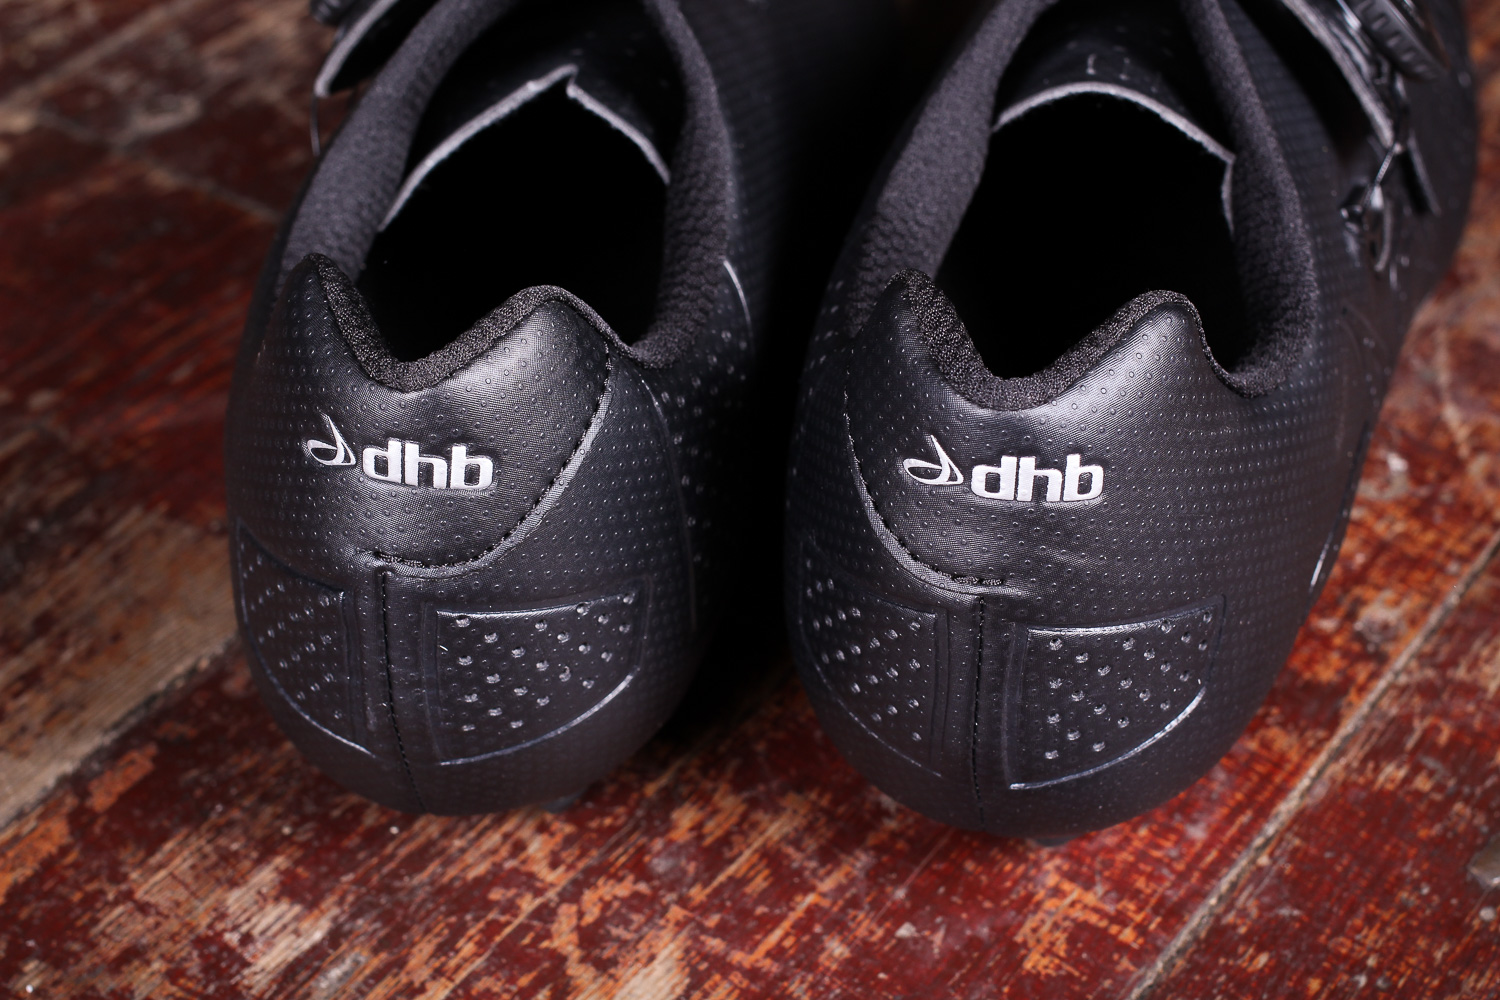 dhb aeron carbon road shoe